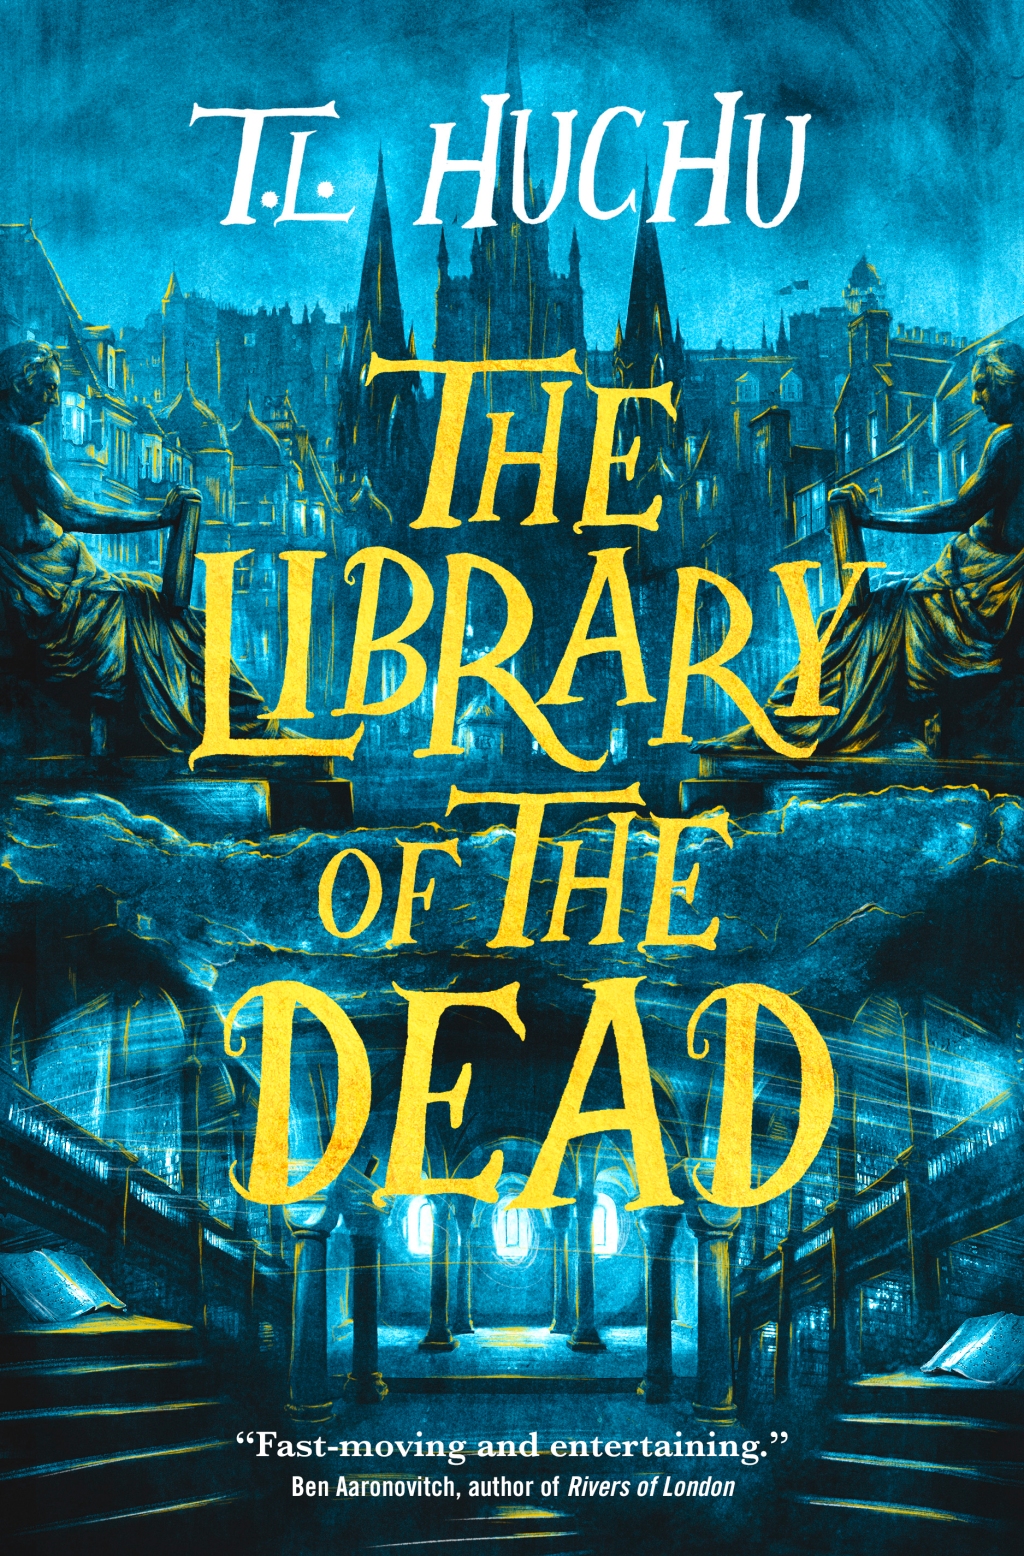 THE LIBRARY OF THE DEAD: EDINBURGH NIGHTS #1 BY T.L. HUCHU MINI REVIEW